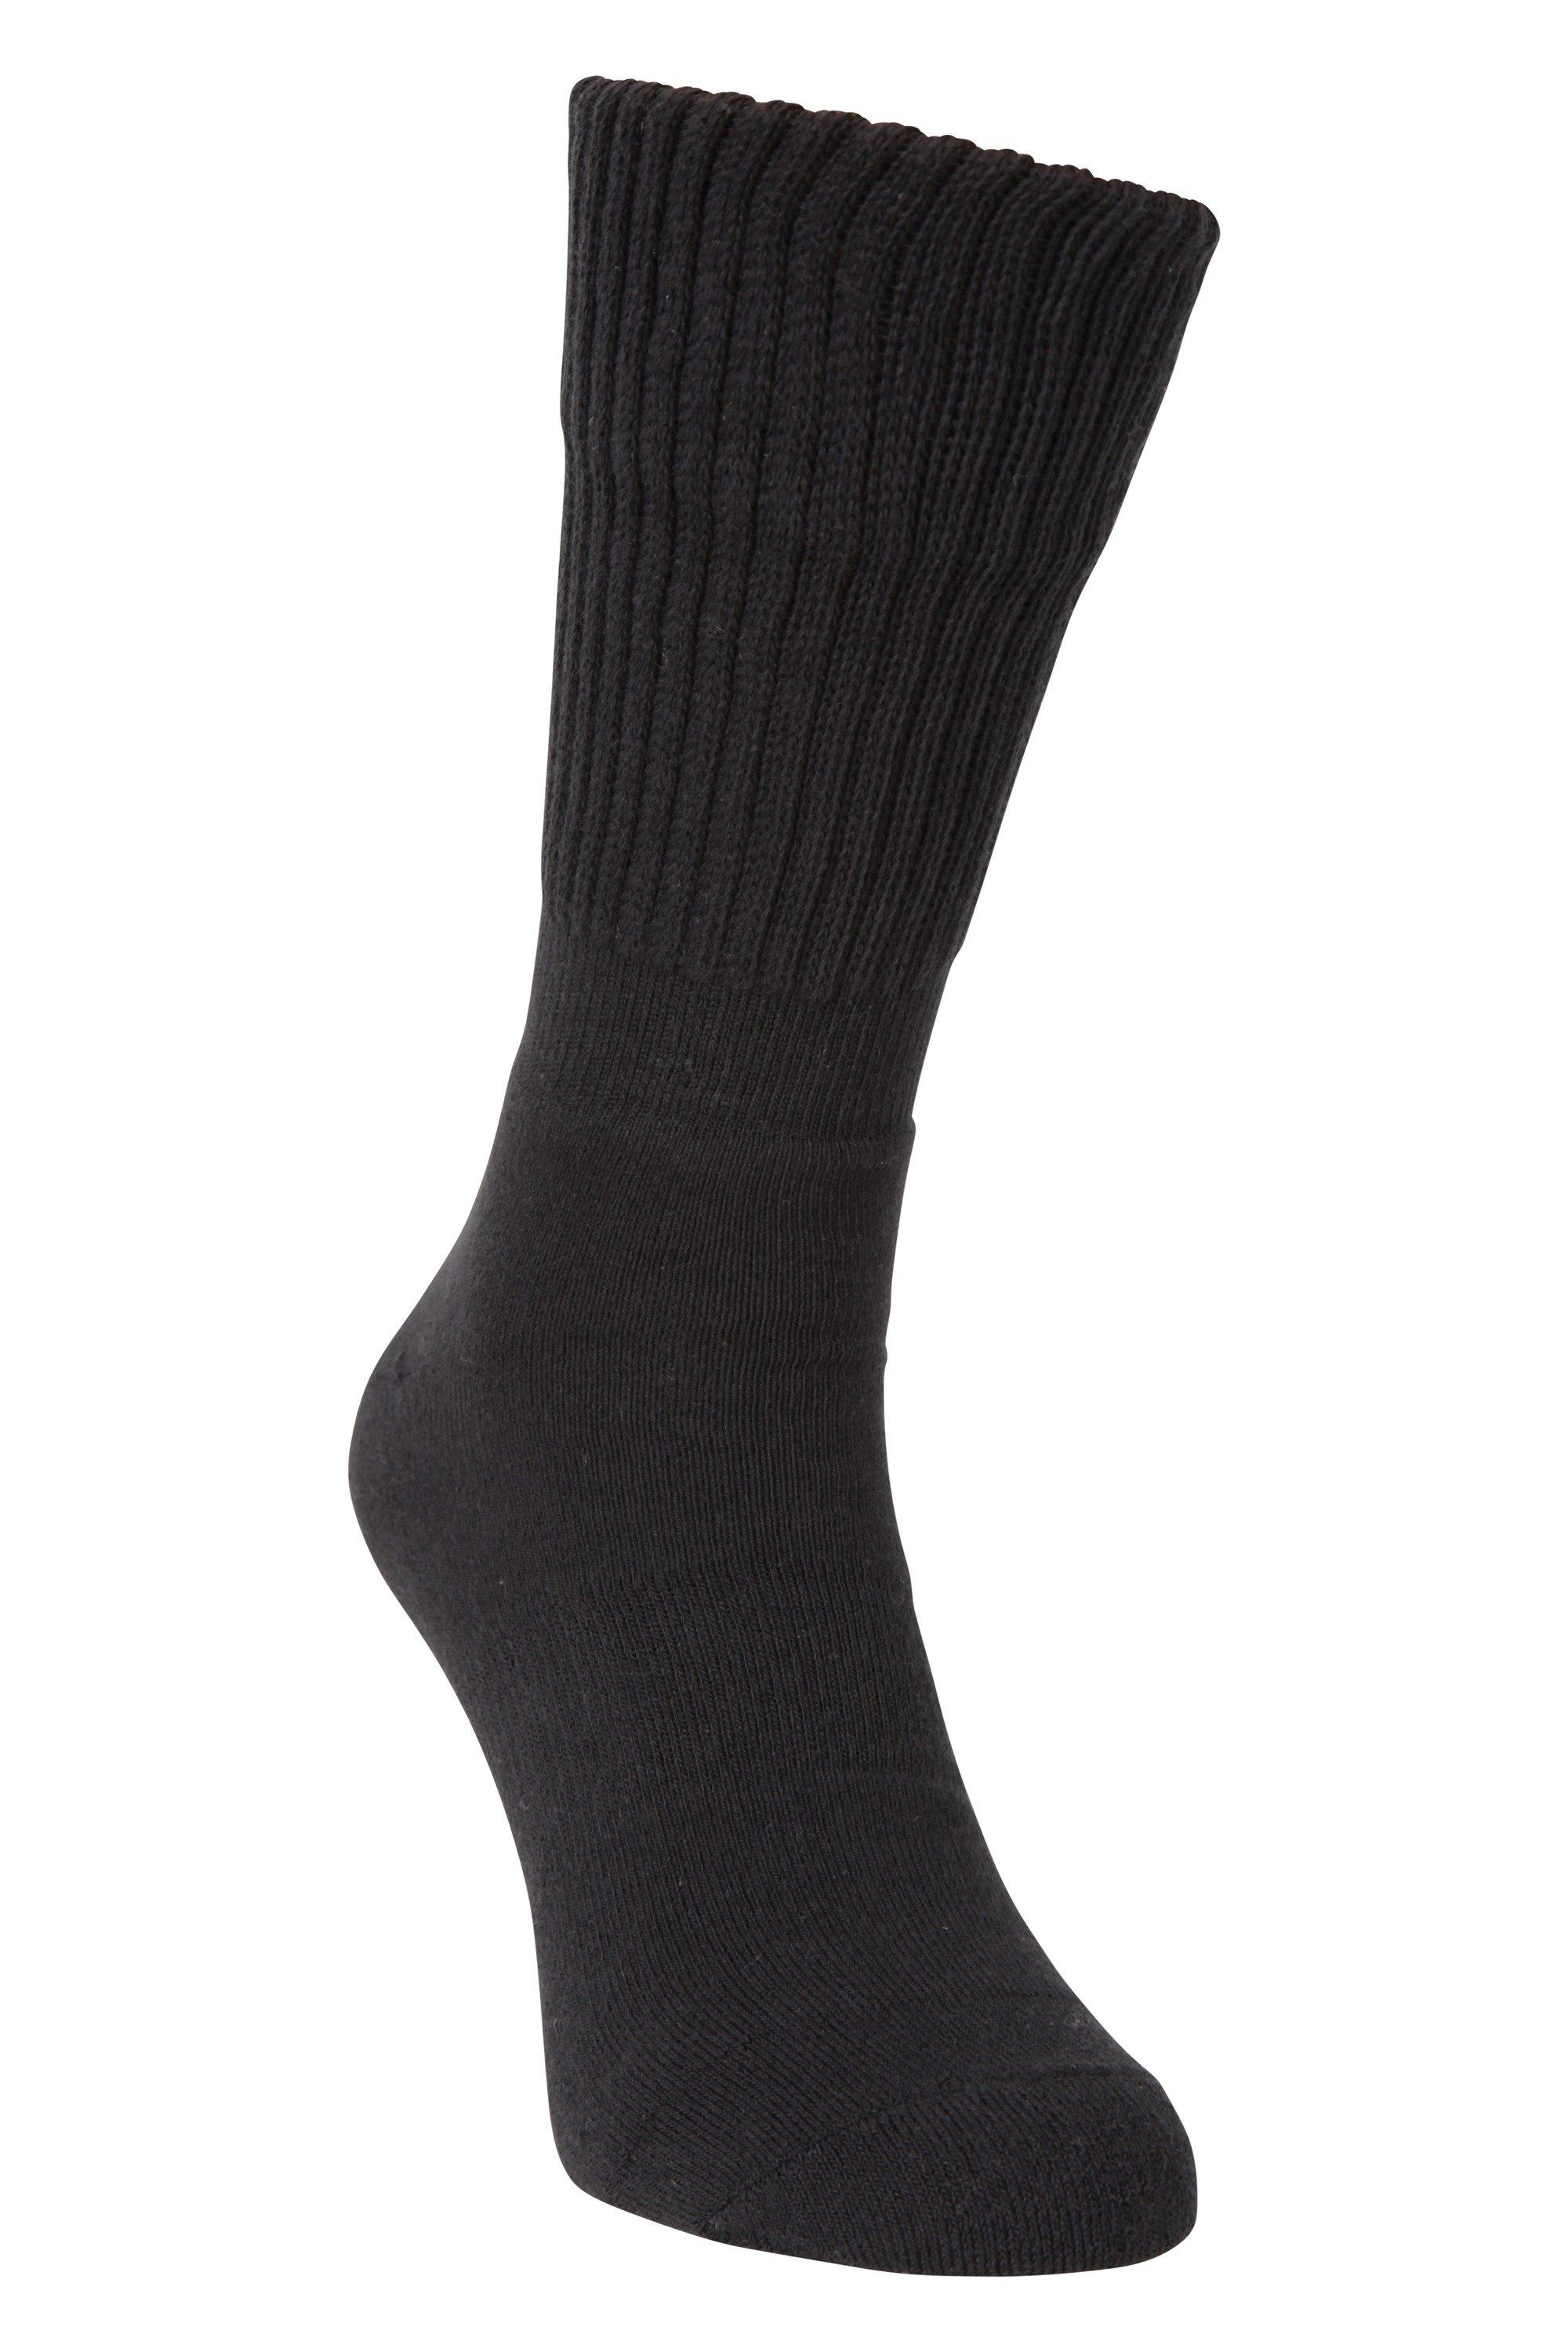 Anti Chafe Walking Sock Double Layer Breathable Socks